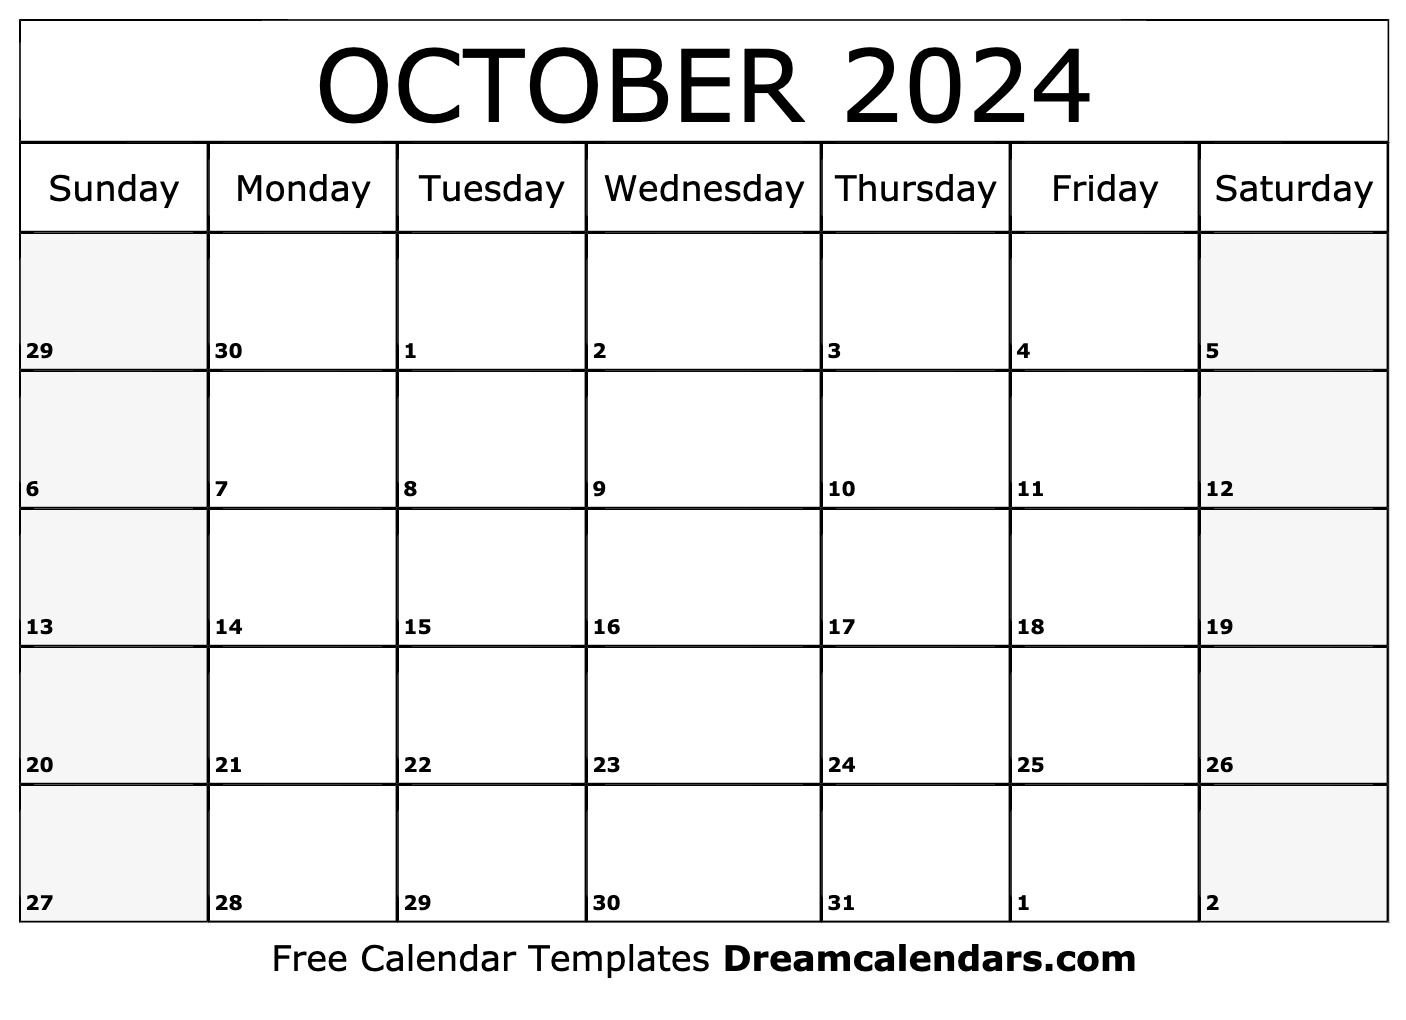 October 2024 Calendar | Free Blank Printable With Holidays for Oct 2024 Calendar Printable